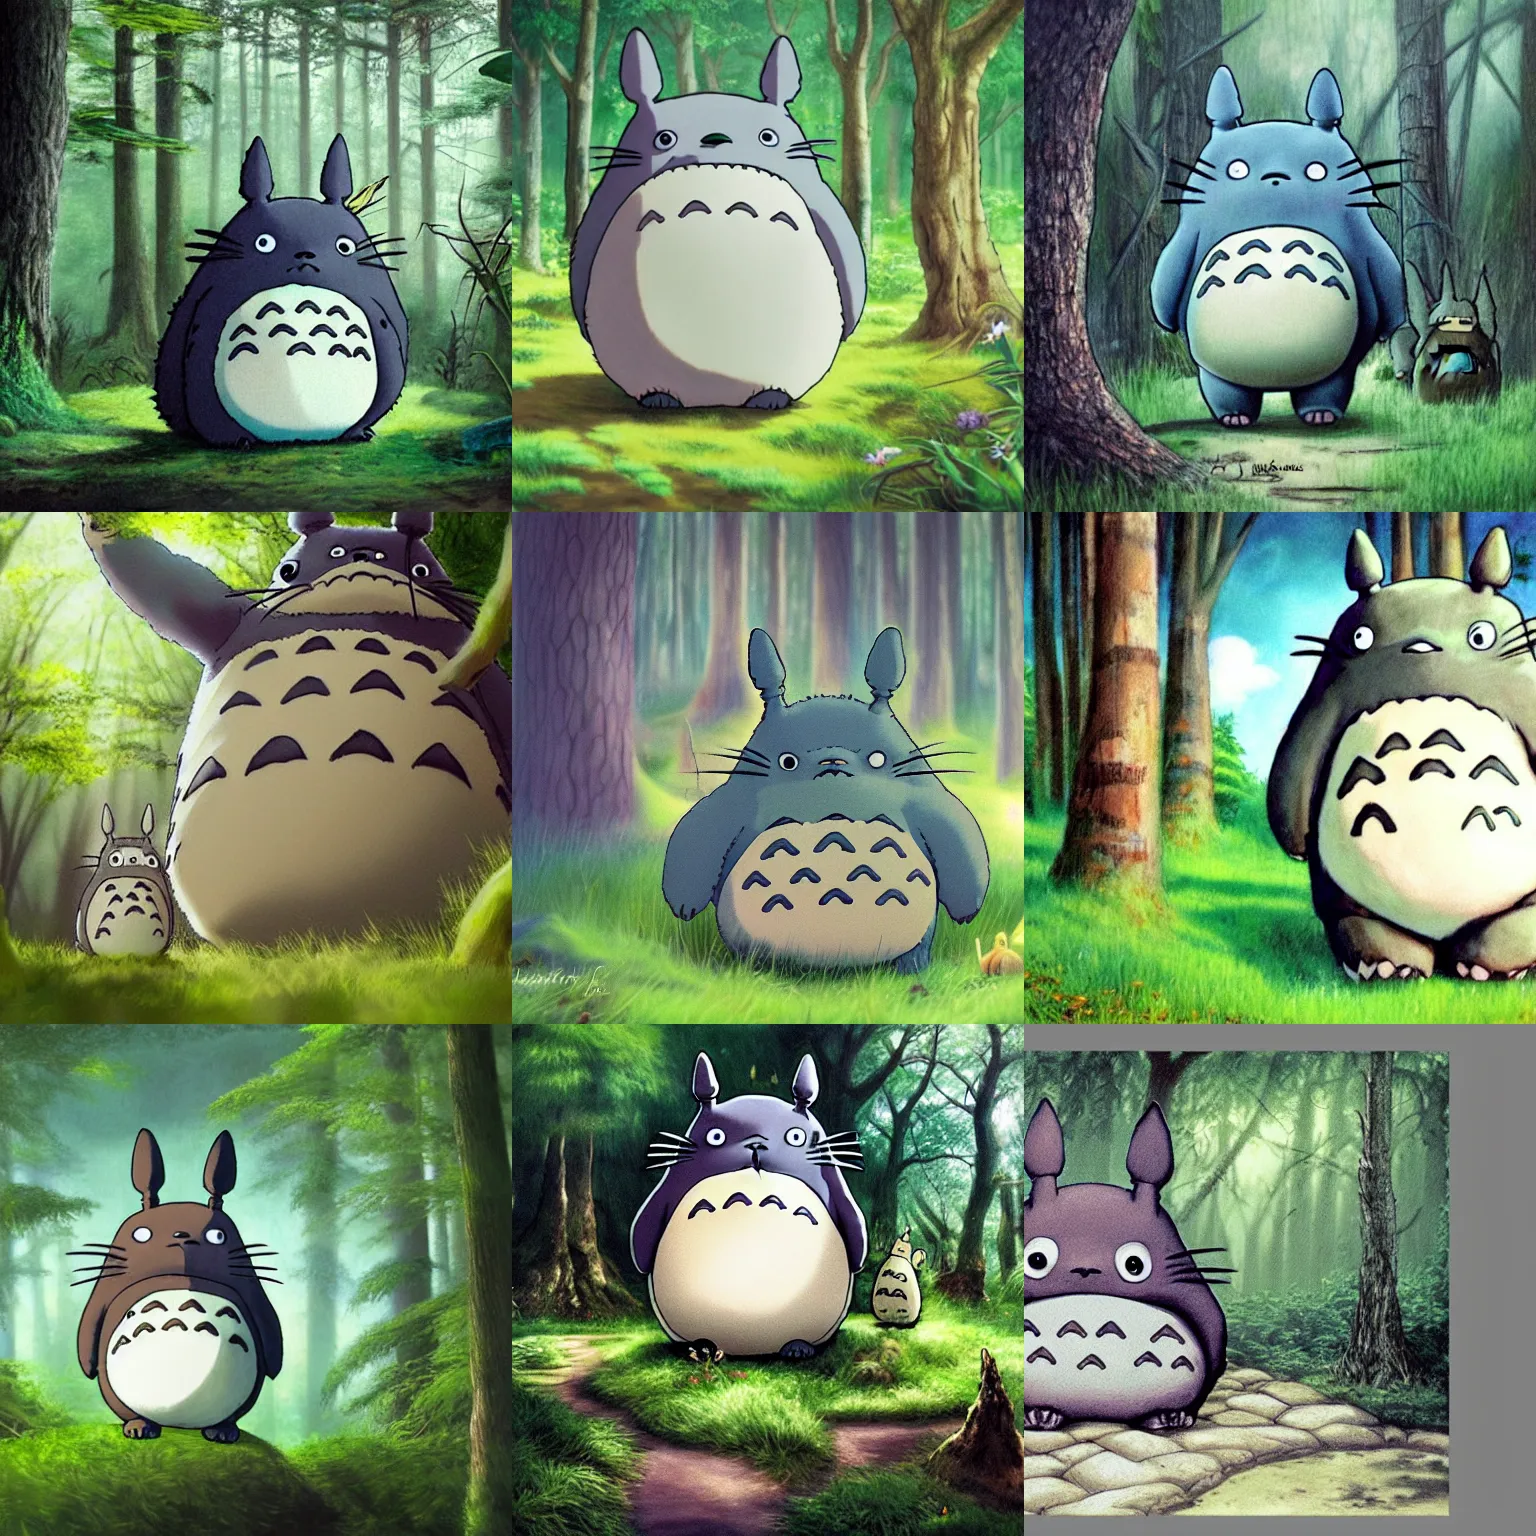 Ecological magic in My Neighbor Totoro